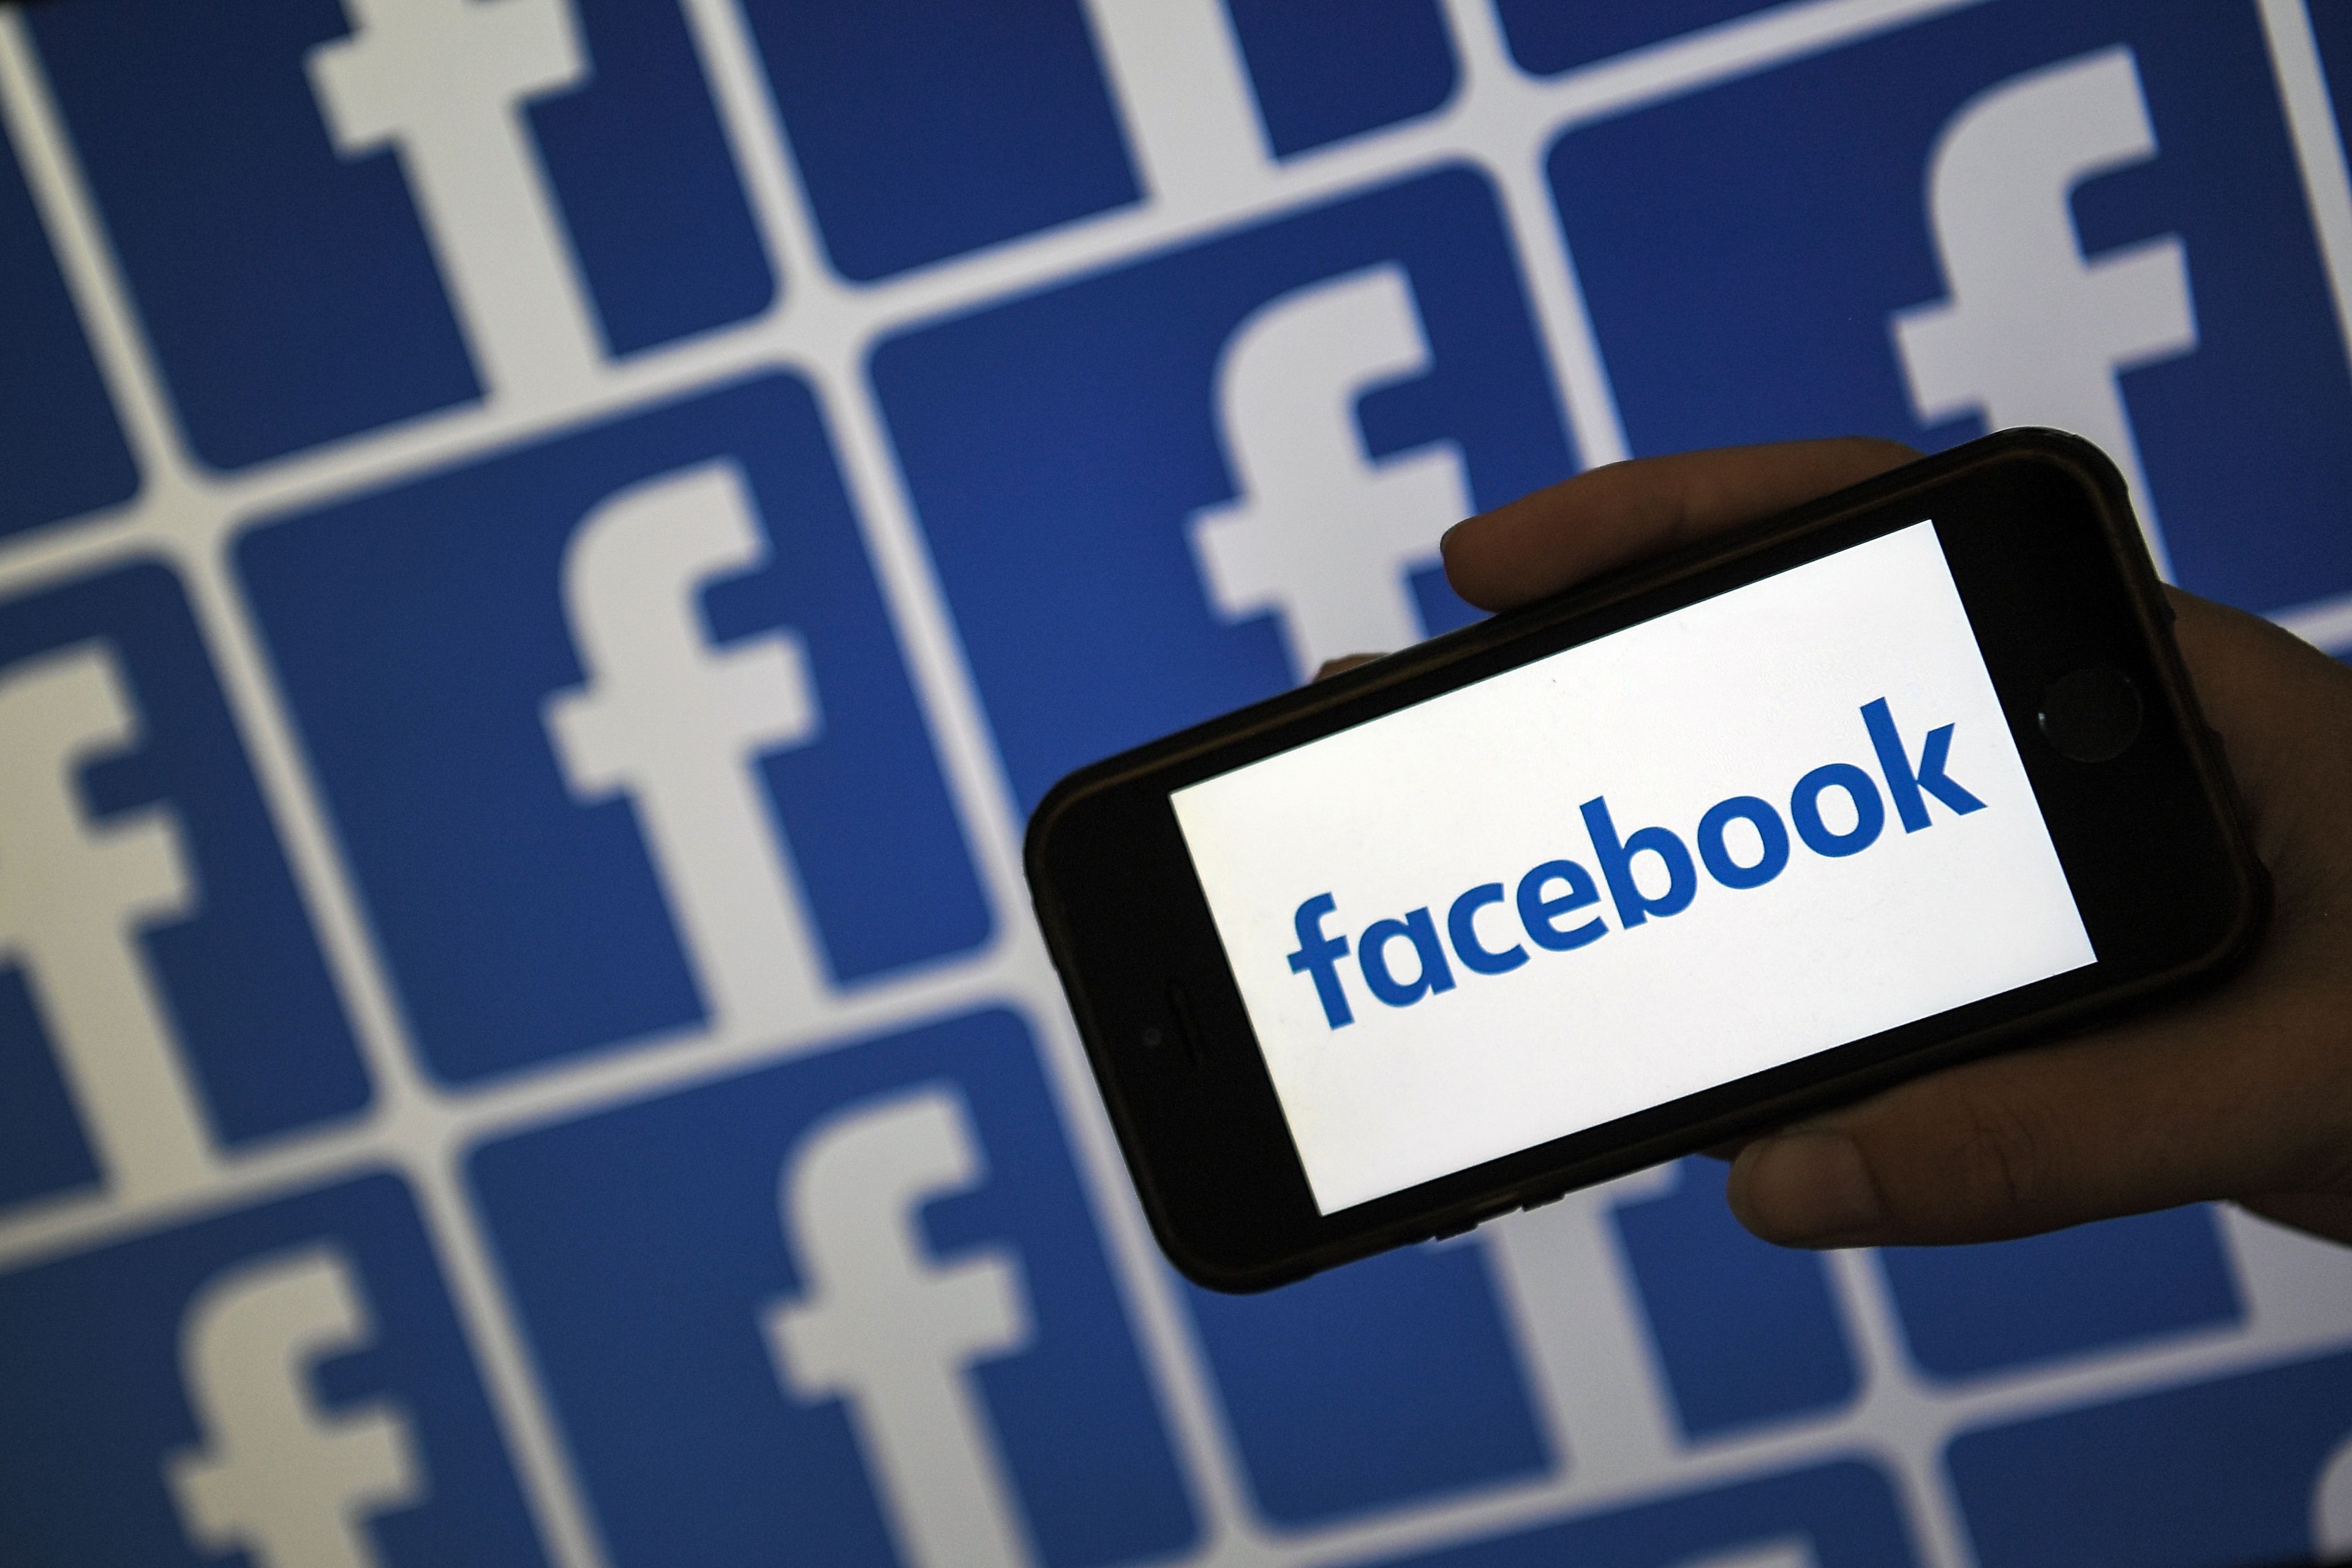 Facebook share price: will Q2 results match an impressive first quarter?